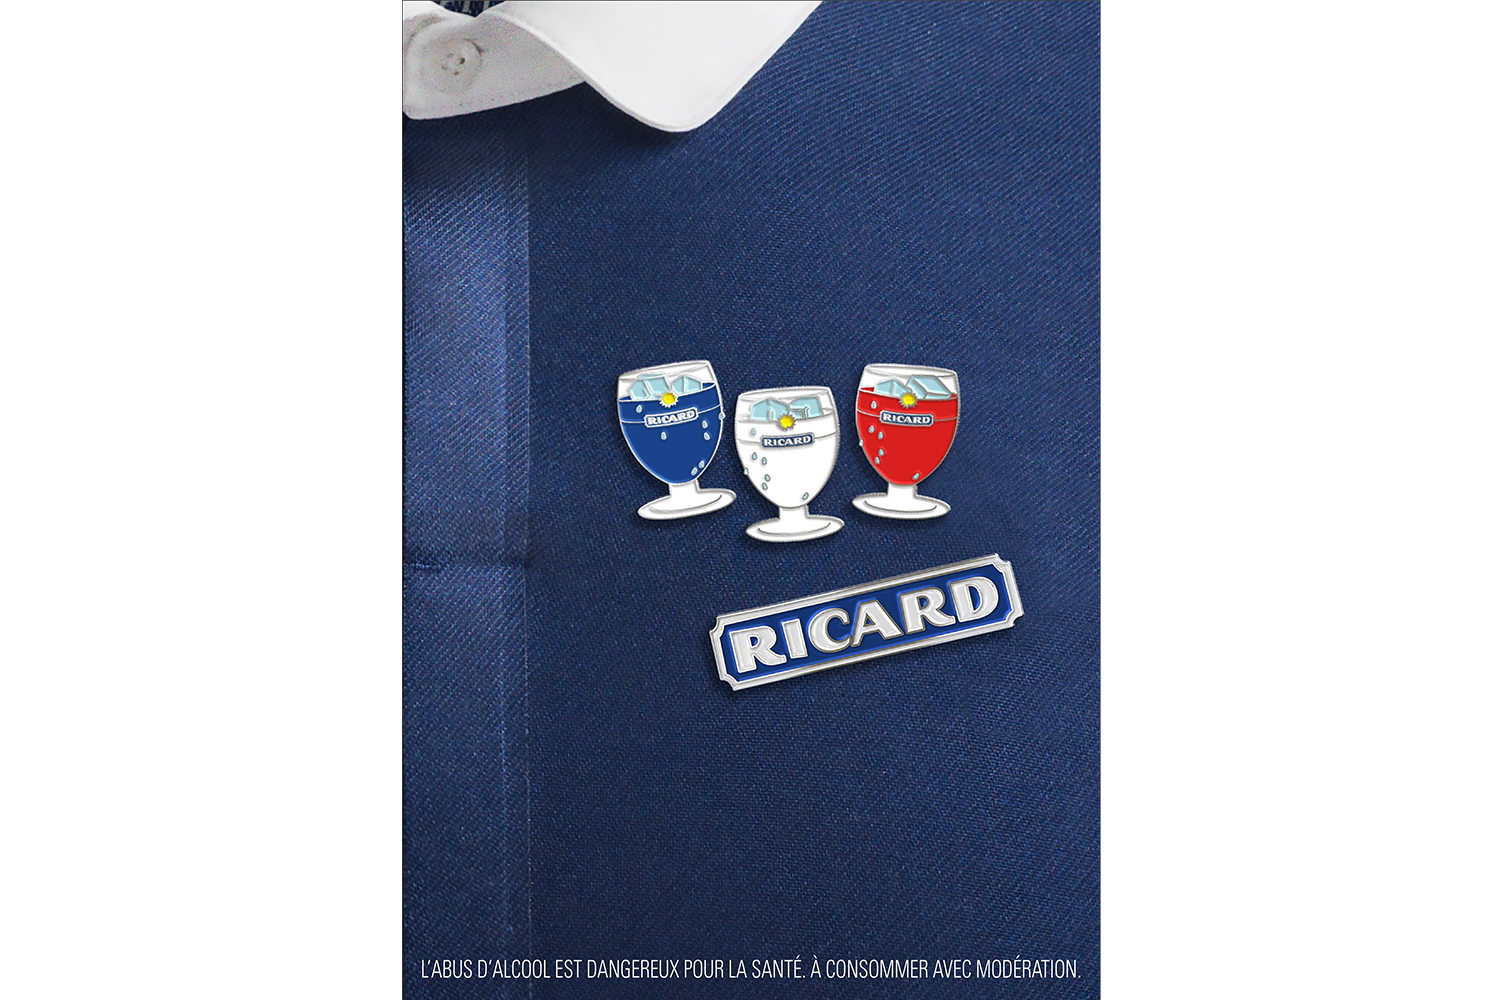 Ricard_2017_c.png